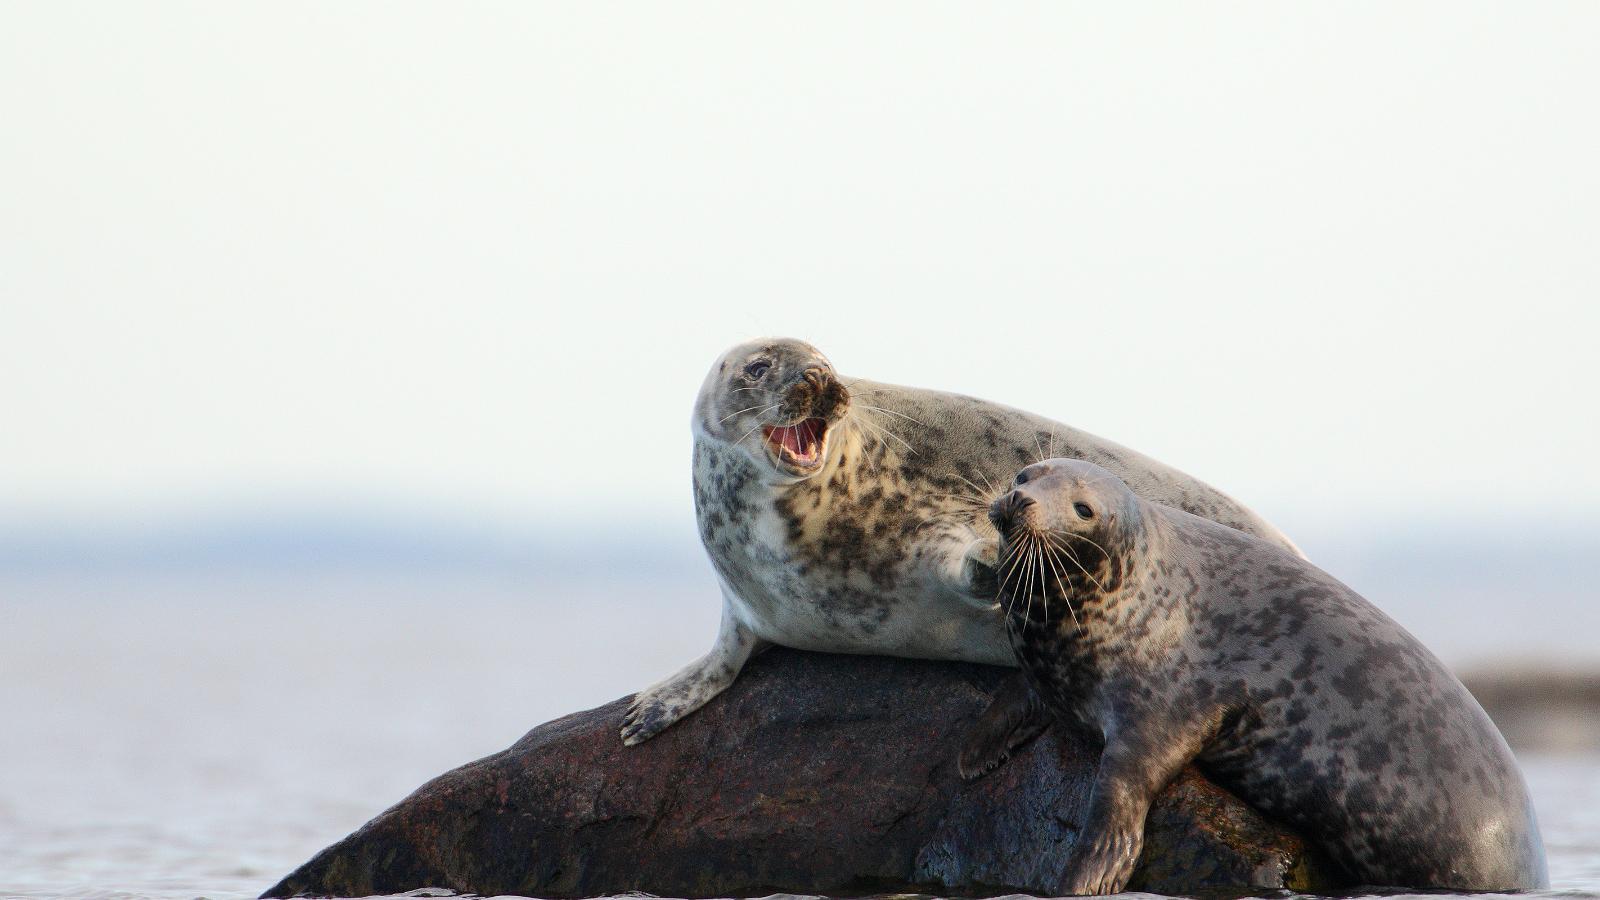 Regular Seal Observation Trips among the Islands of Kolga Bay